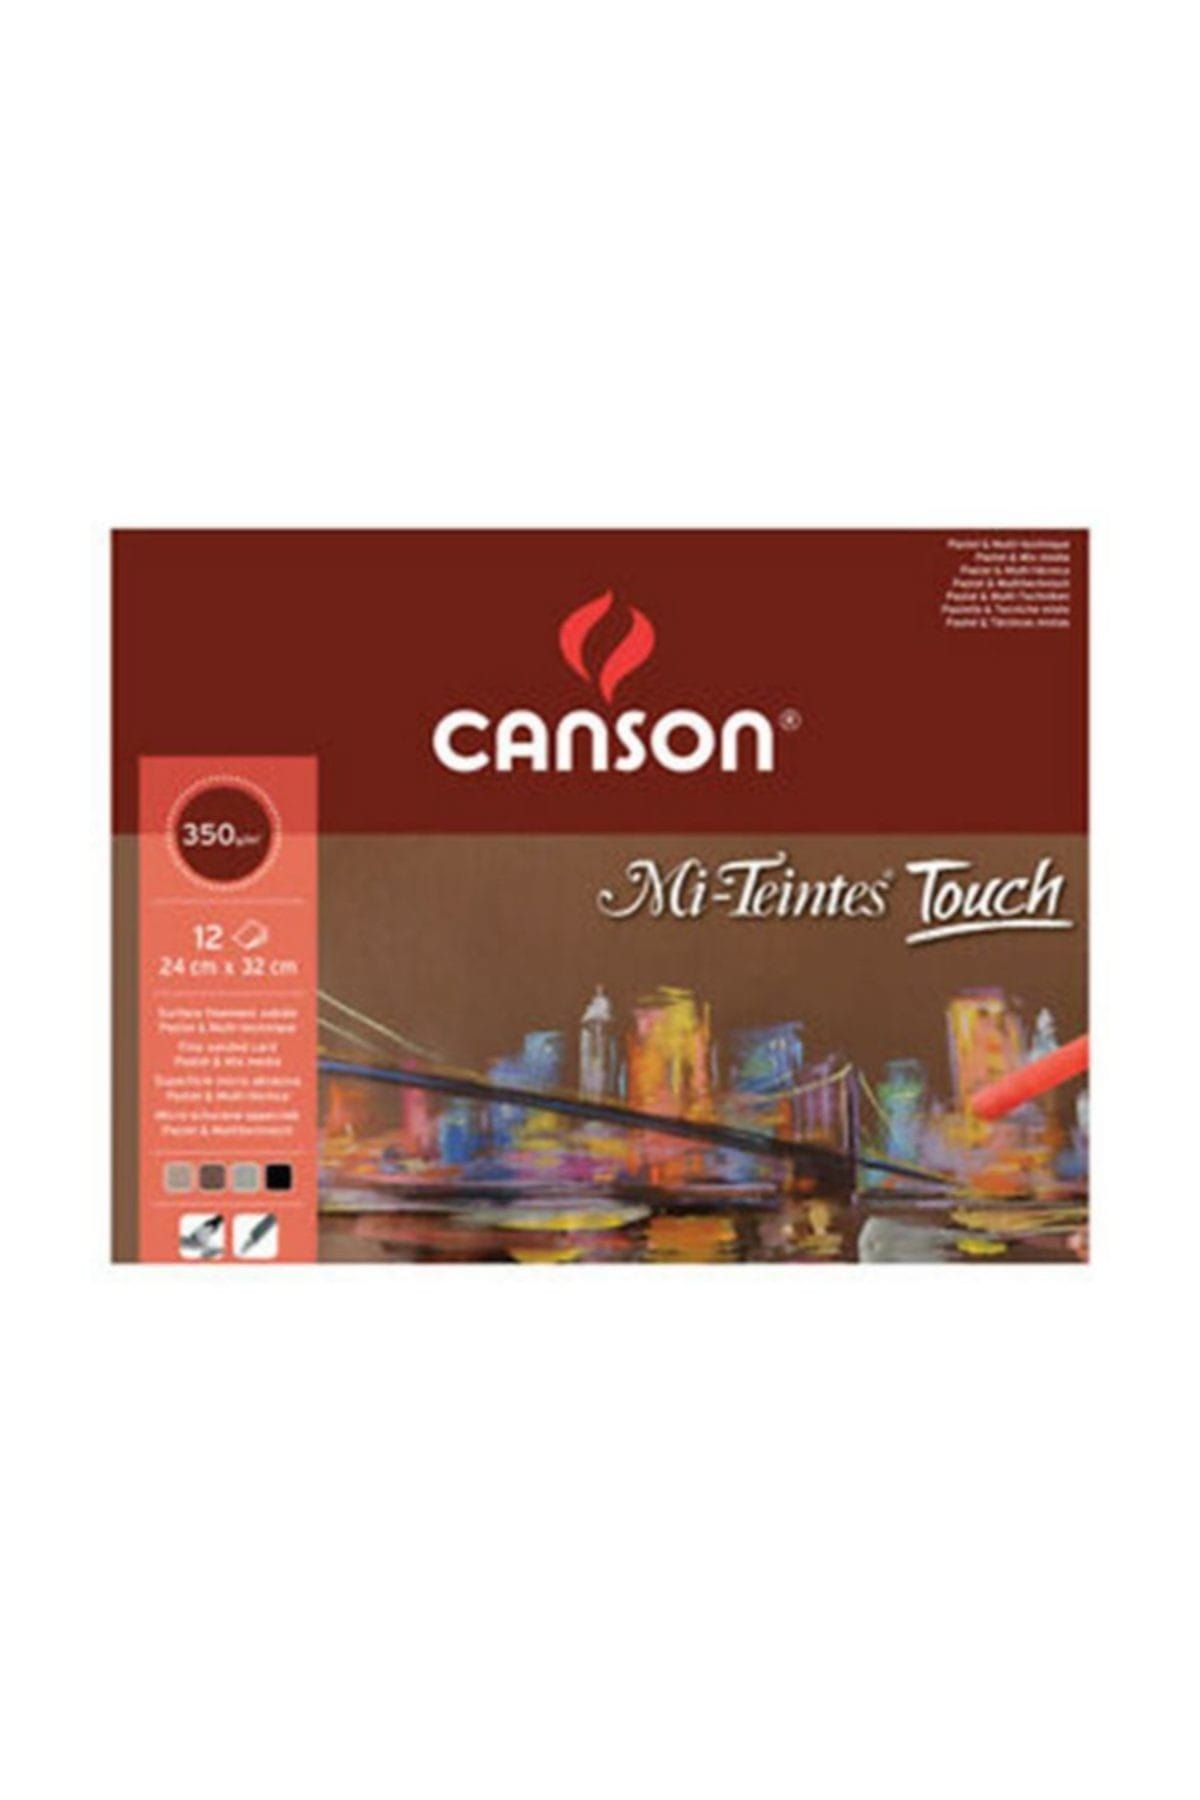 Canson Mi-Teintes Touch Pastel Defteri 12 Sayfa 350g 24x32